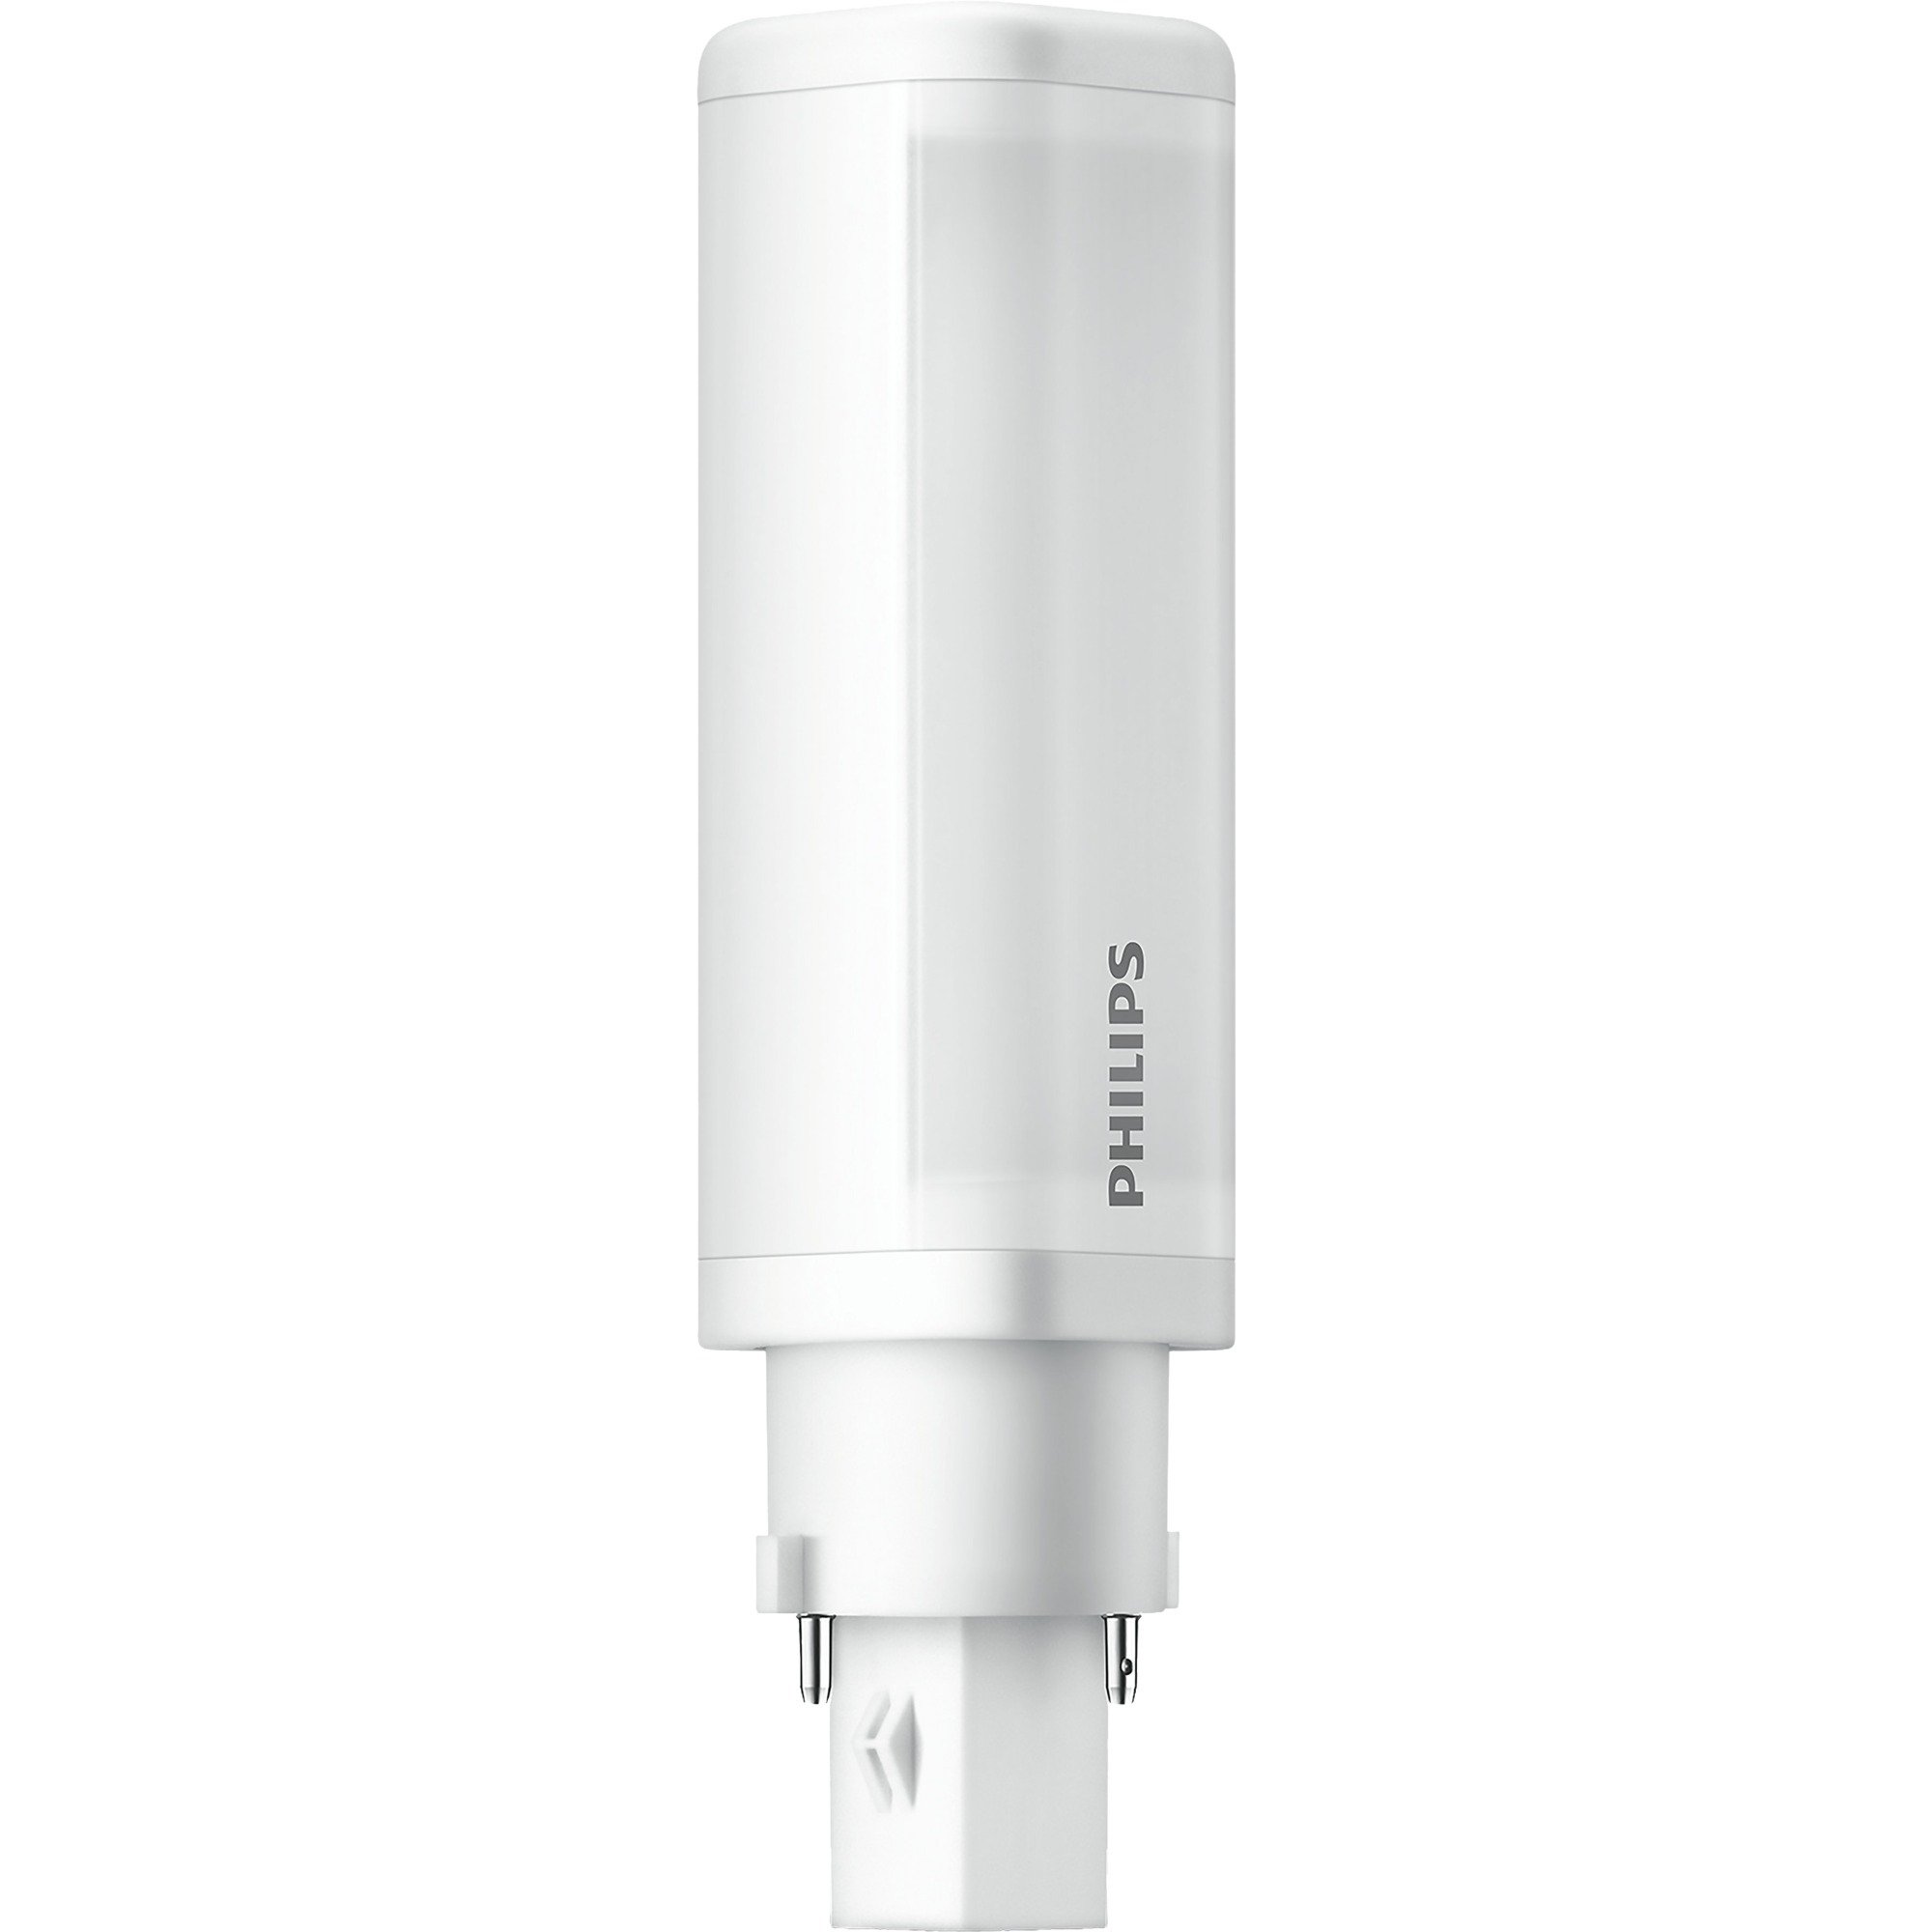 CorePro LED PLC 4.5W 830 2P G24d-1 energy-saving lamp Bia?y 4,5 W A++, Lampa LED